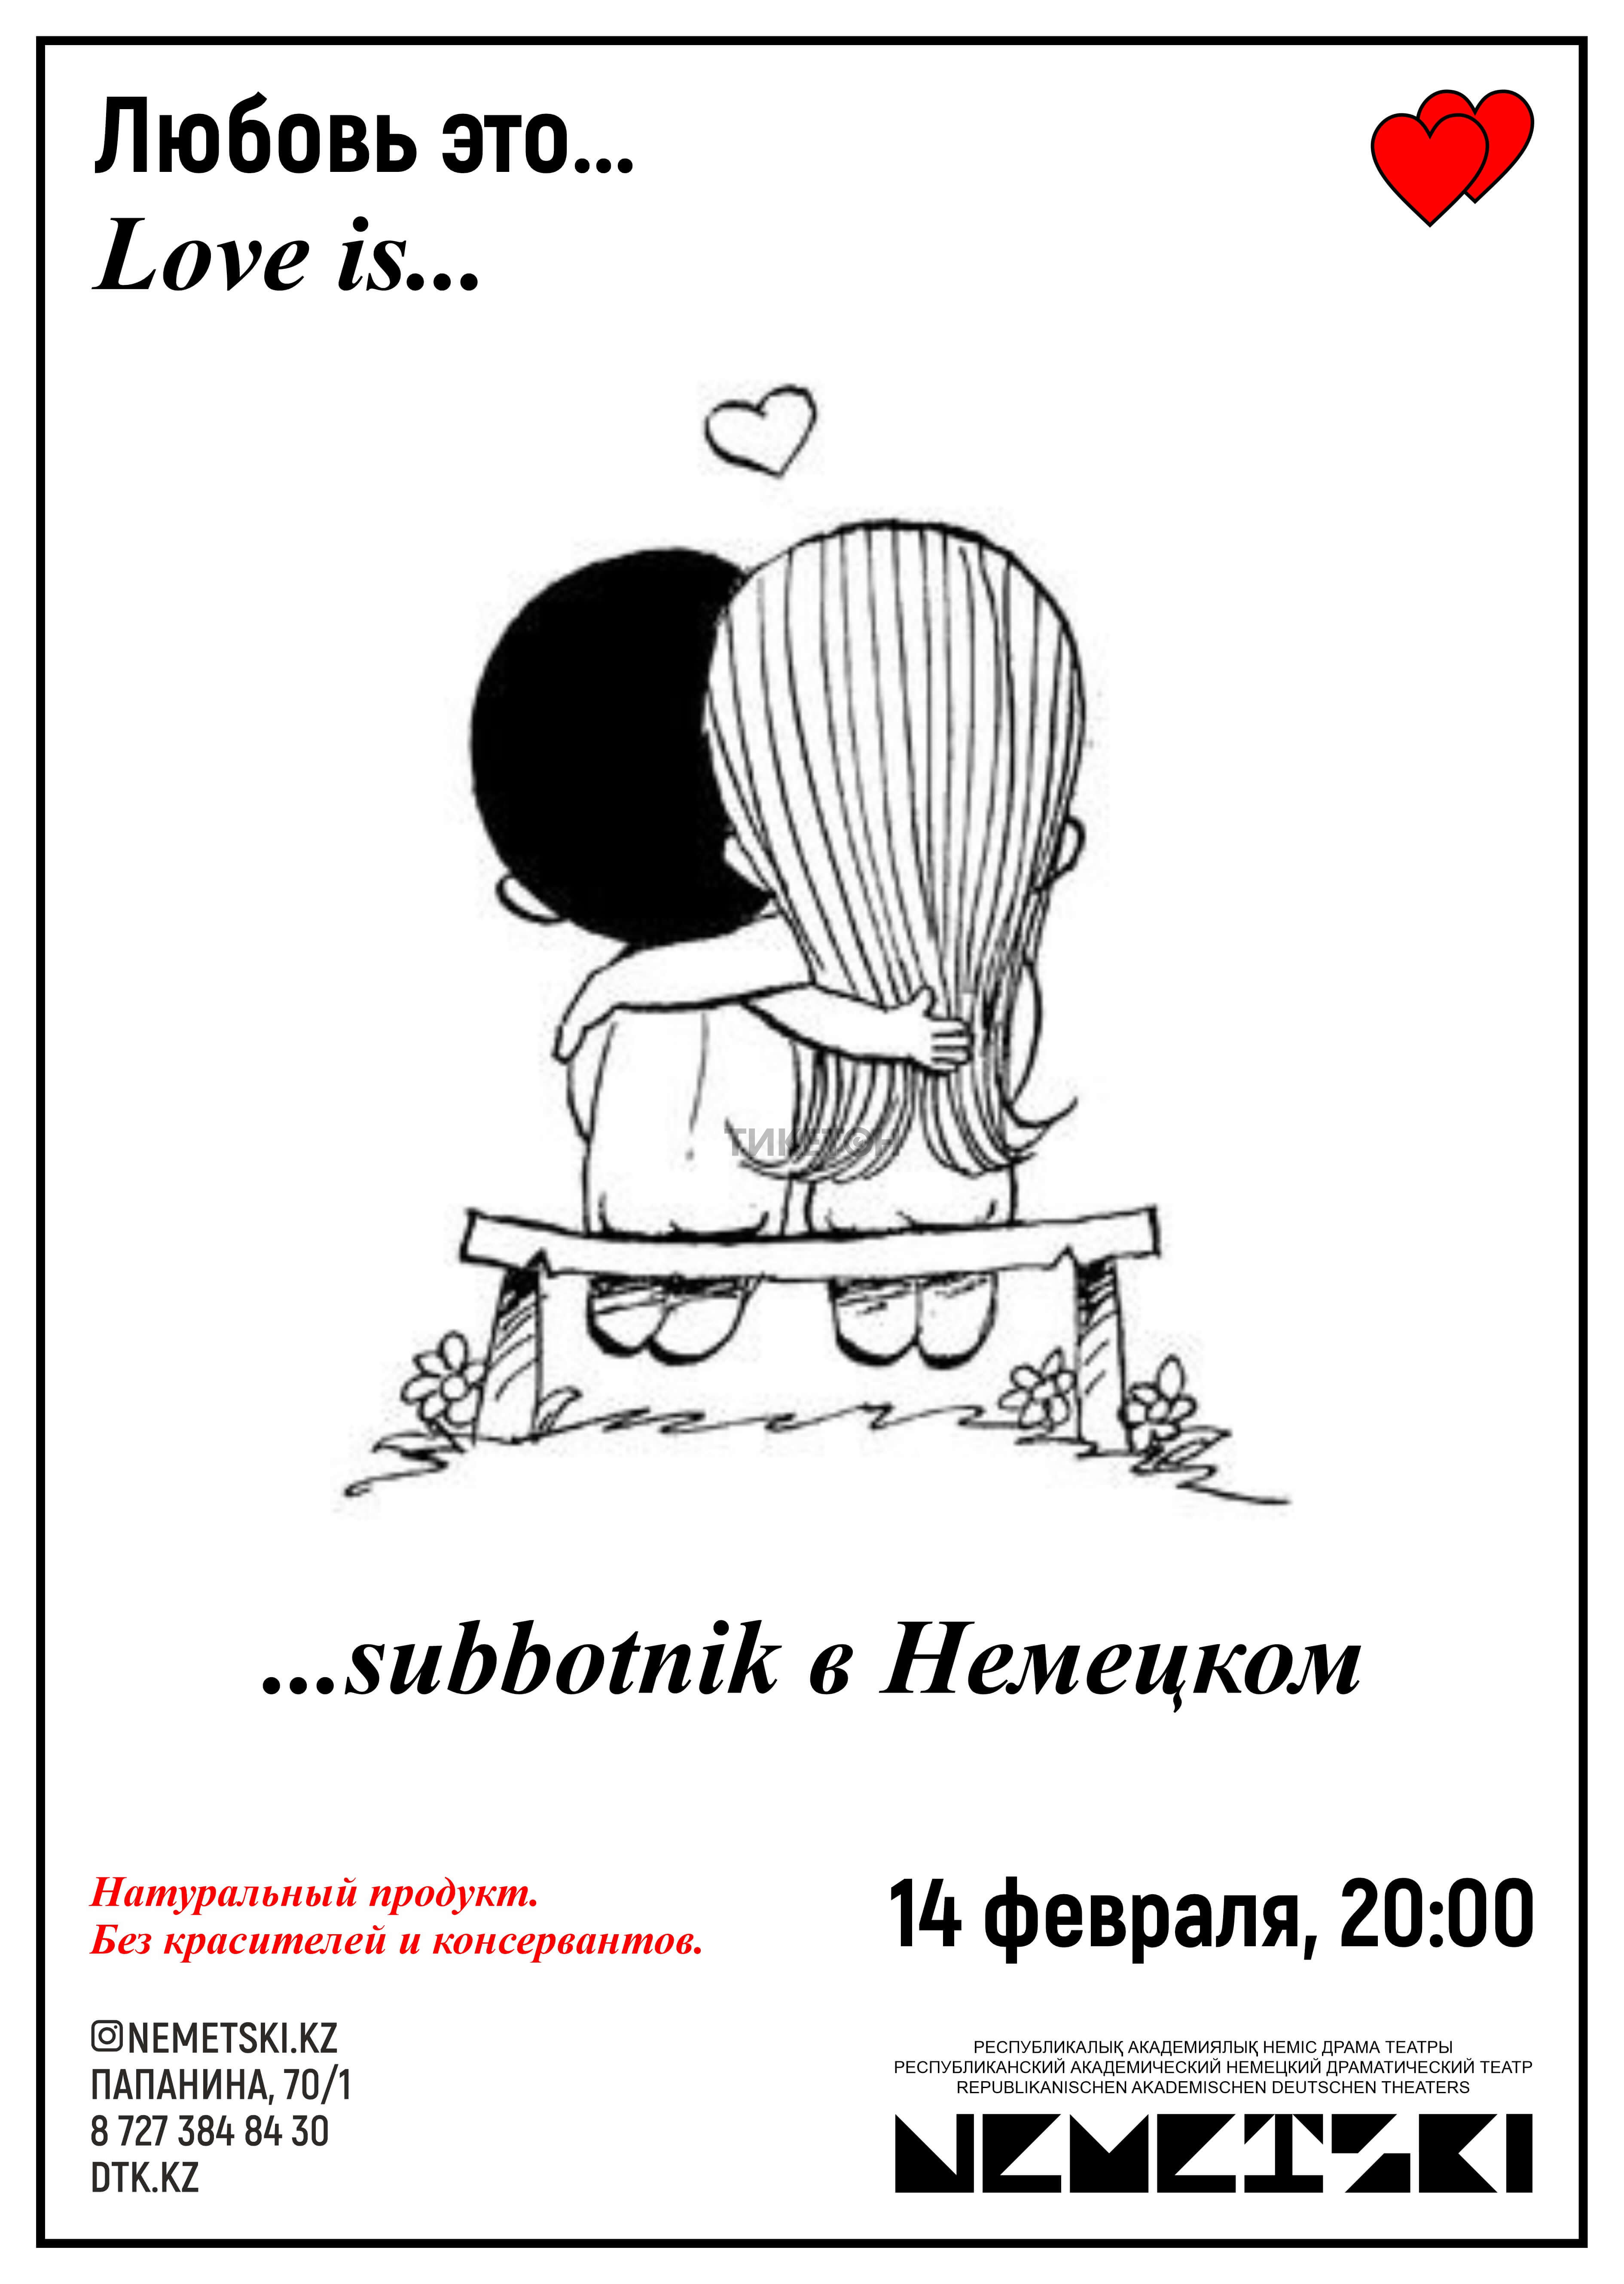 love-is-subbotnik